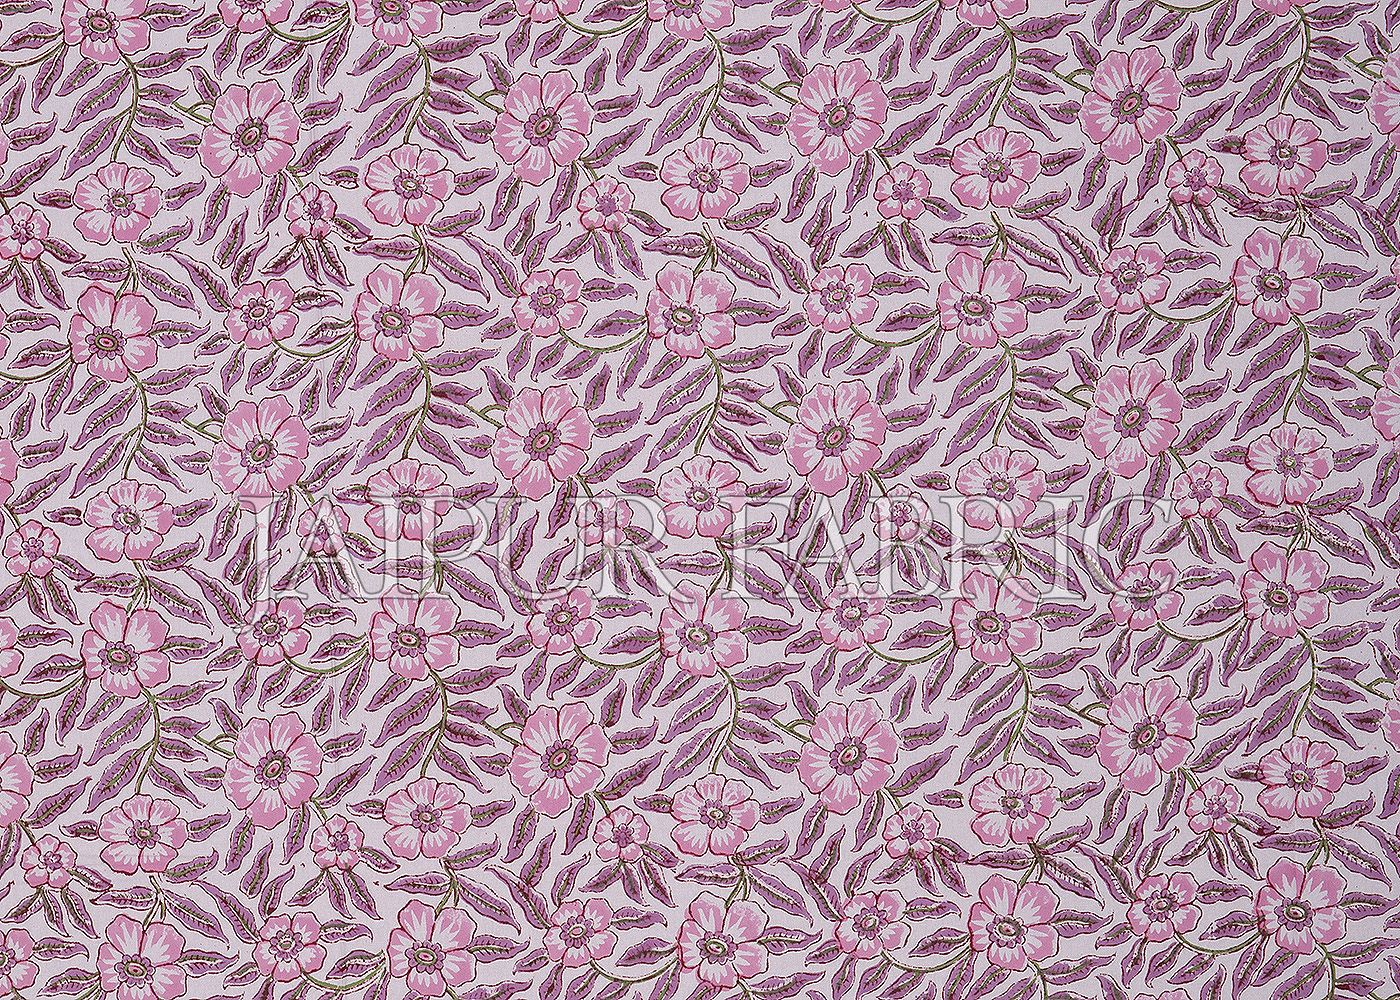 Purple Base Flower Pattern Block Print Cotton Double Bed Sheet